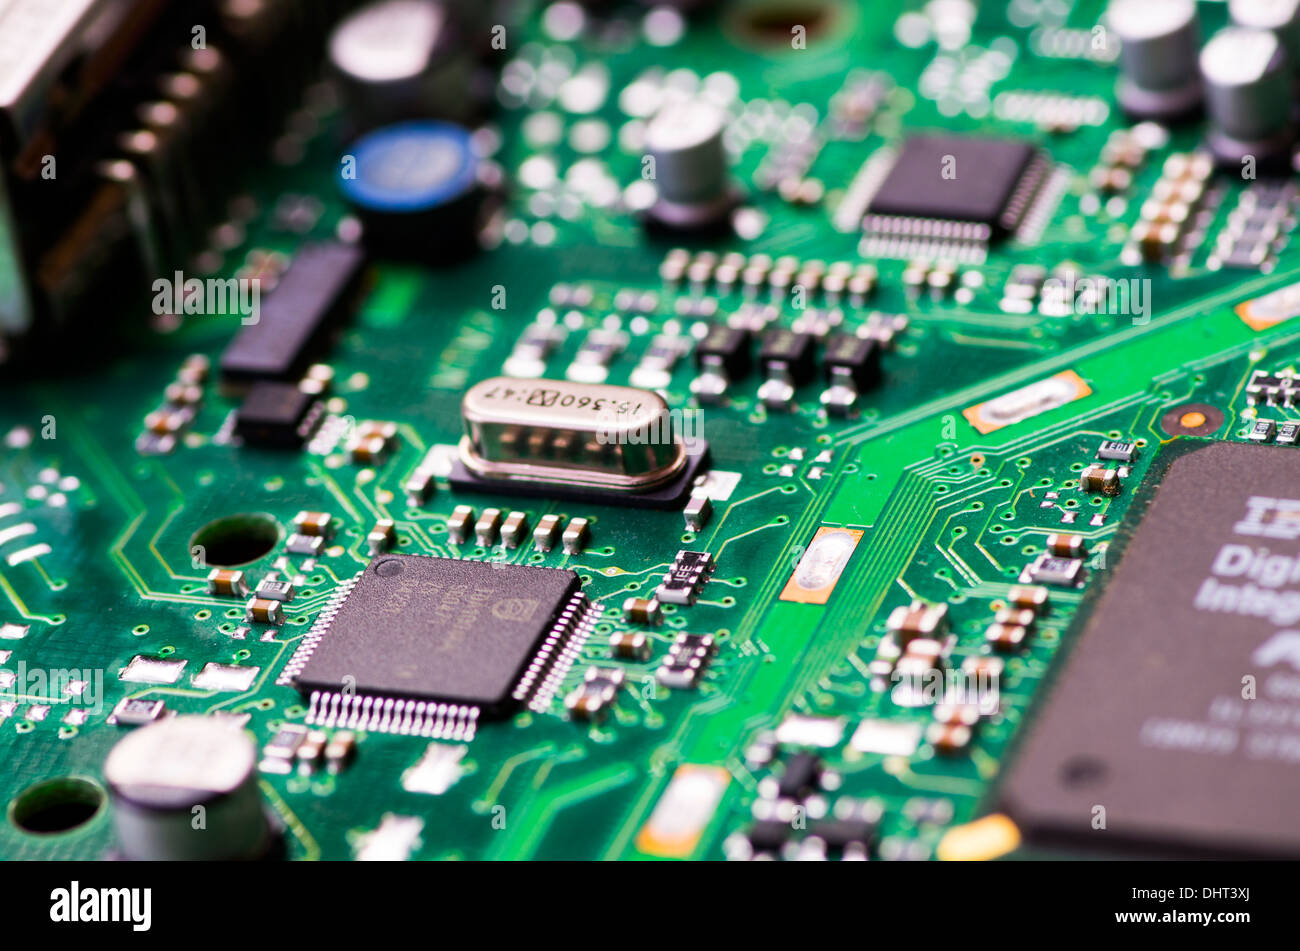 Printed circuit board. Stock Photo